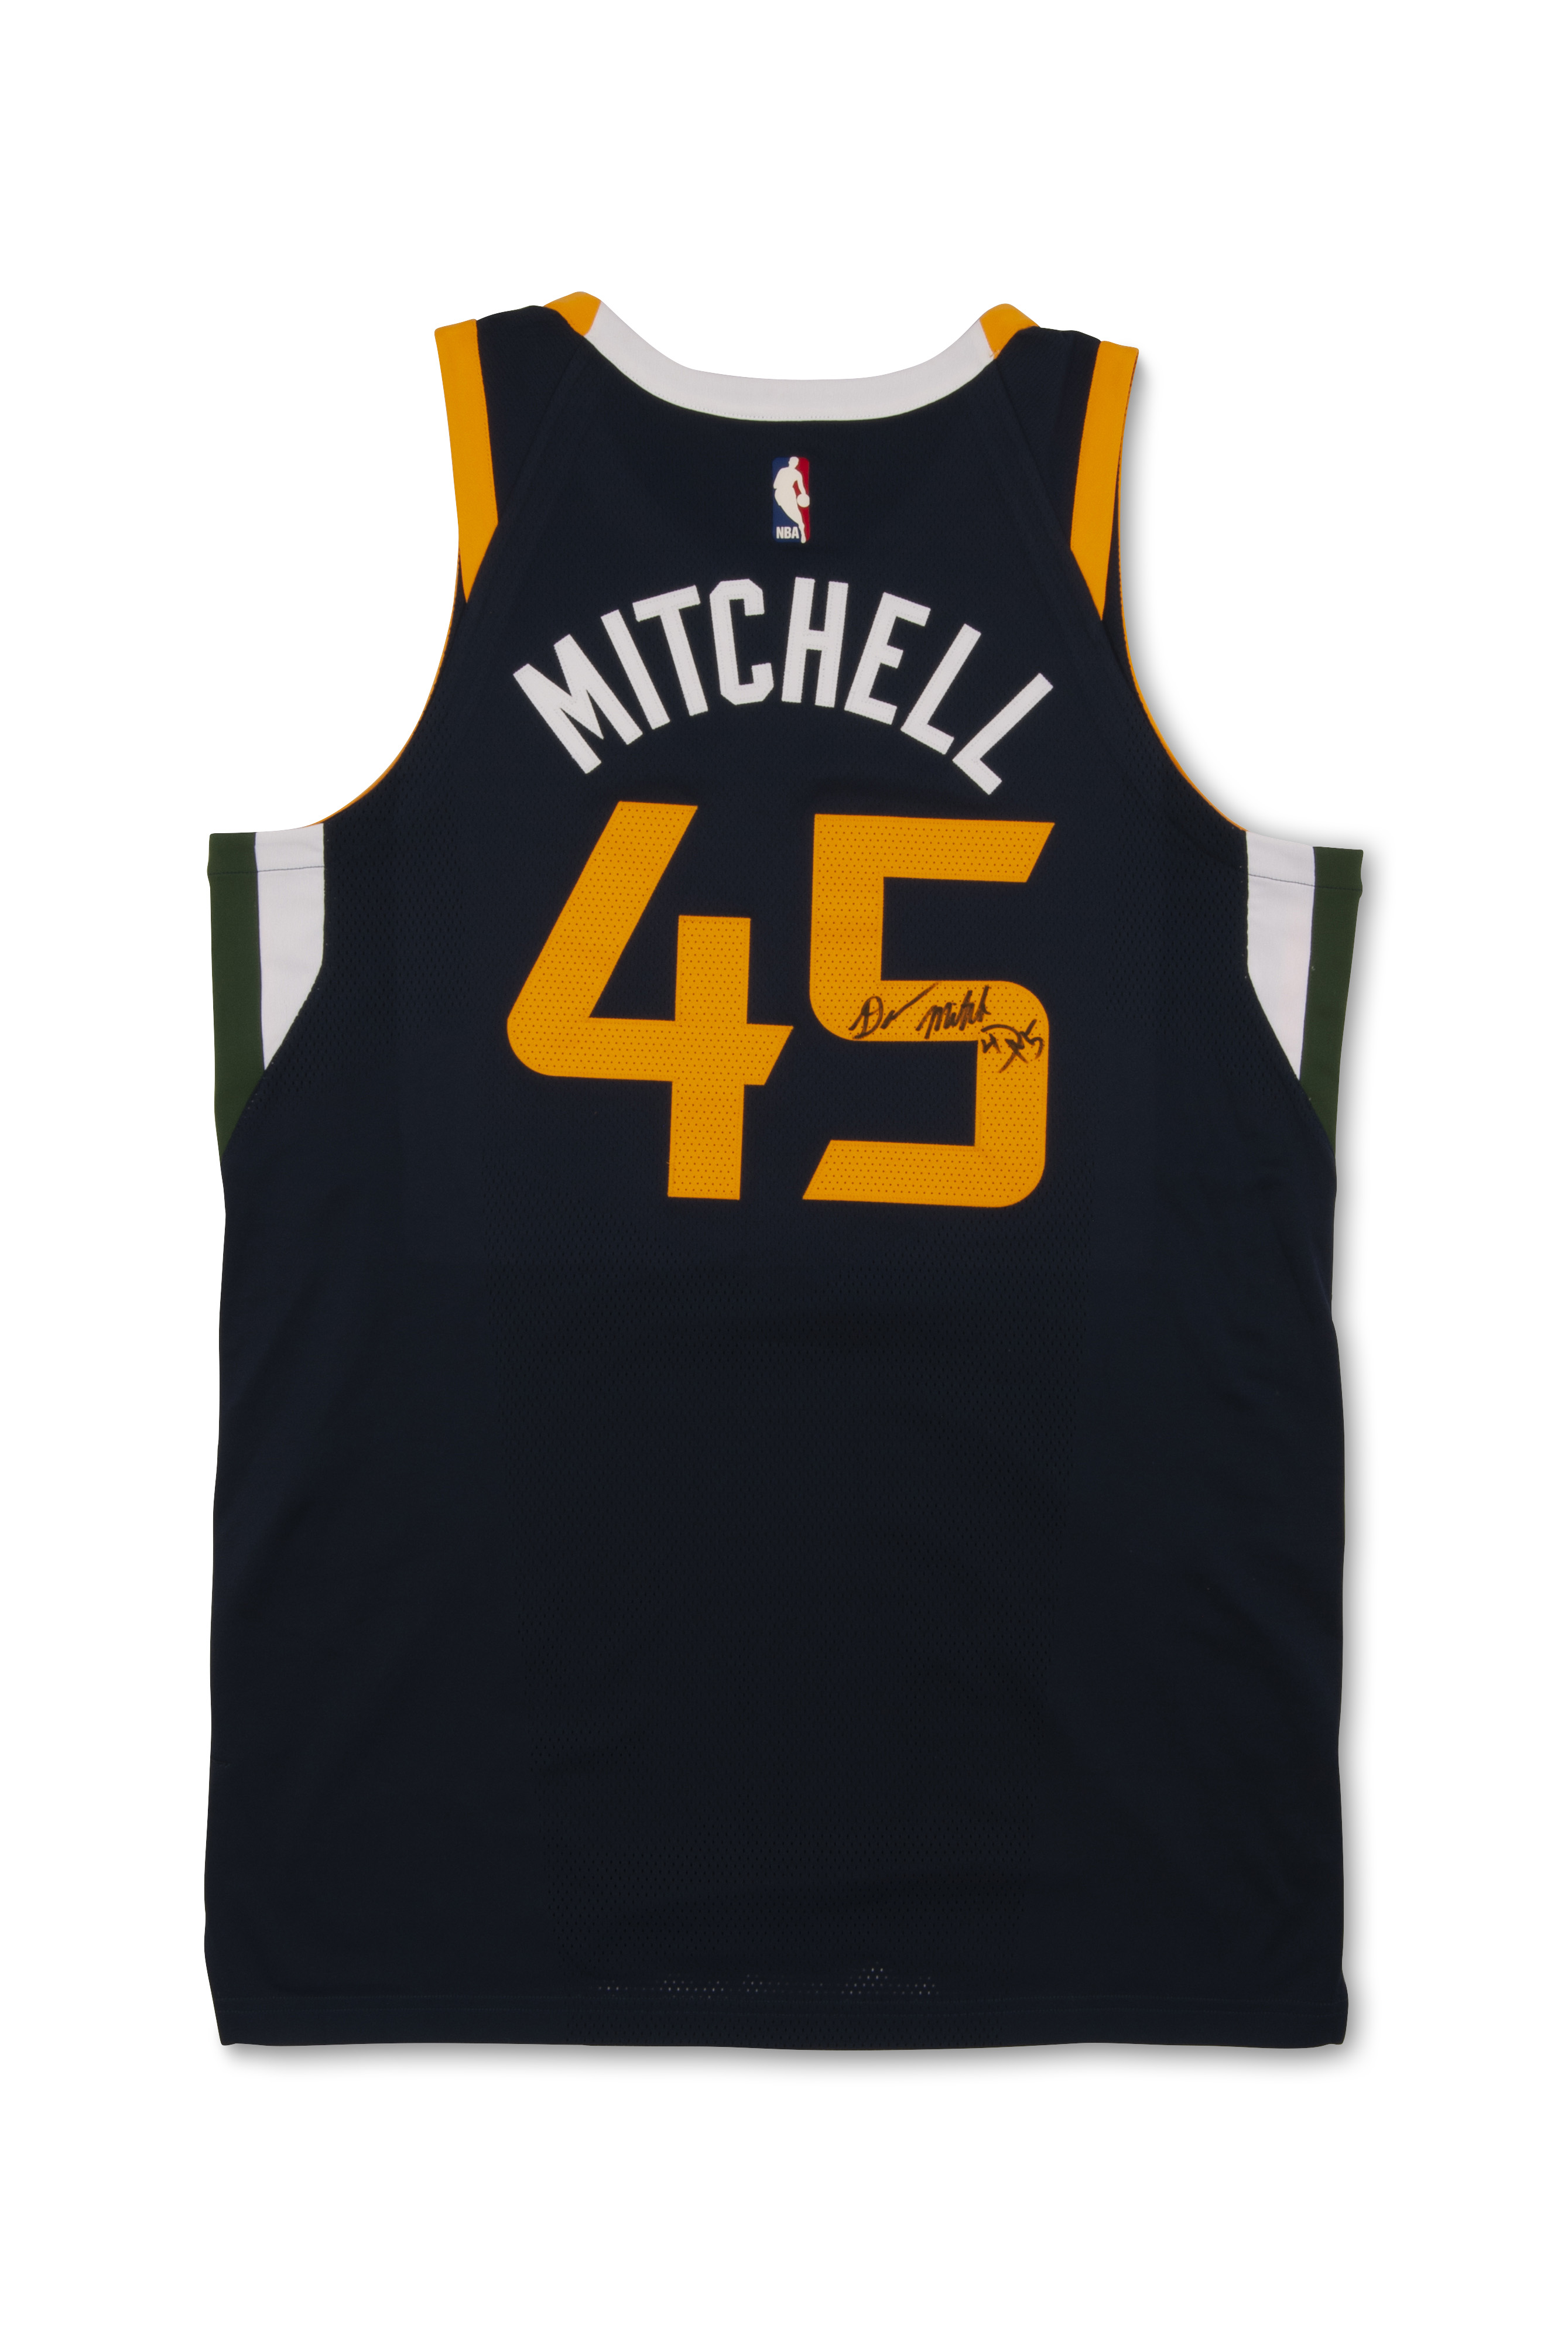 Donovan Mitchell 45 Utah Jazz Jersey City Edition Premium 